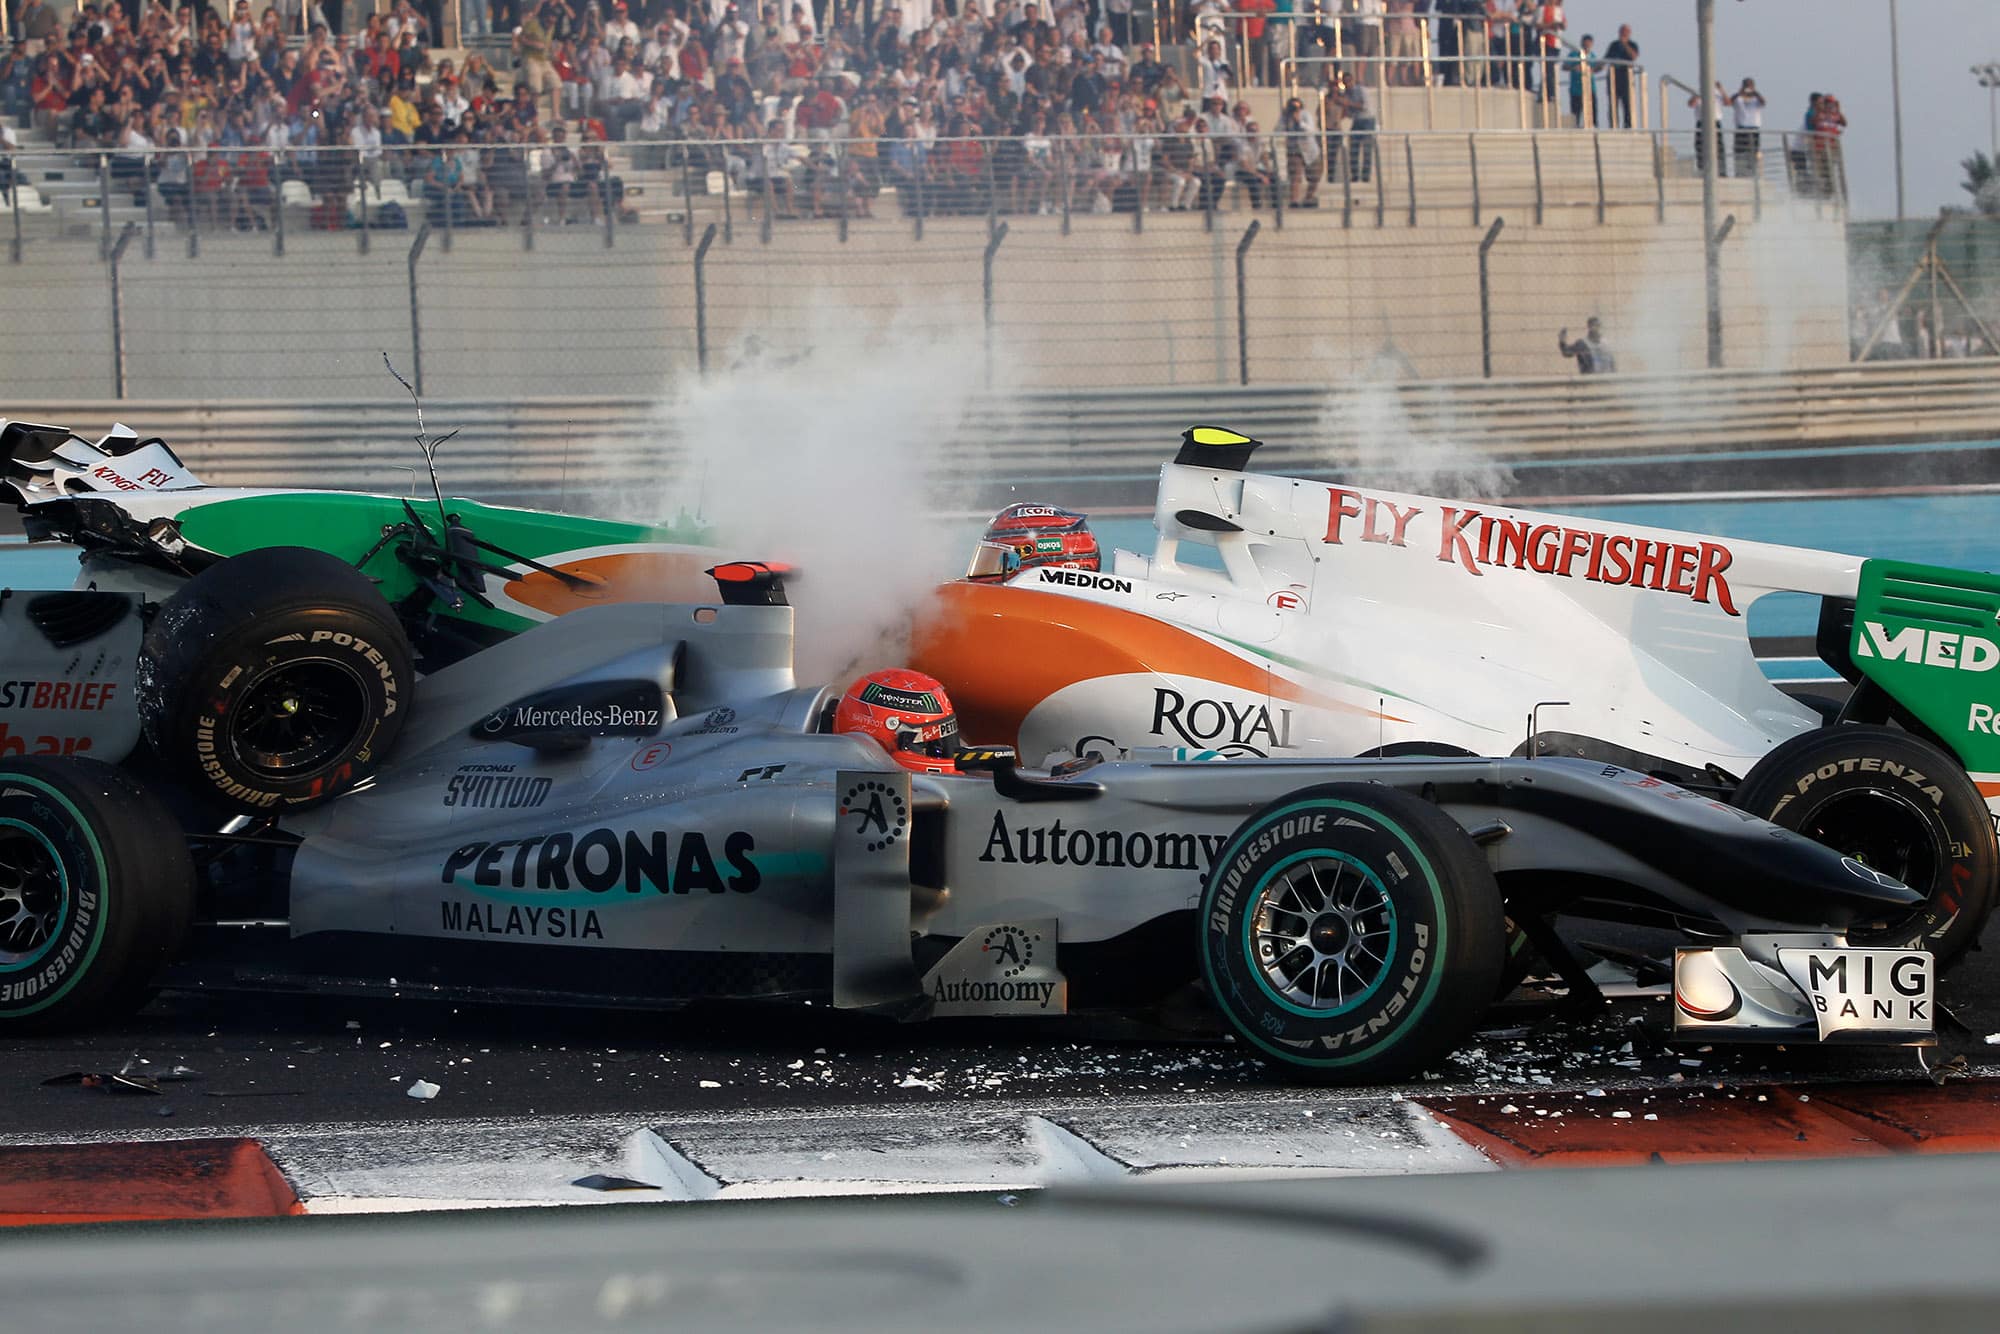 Antonio Luizzi crashes into Michael Schumacher at the start of the 2010 Abu Dhabi Grand Prix